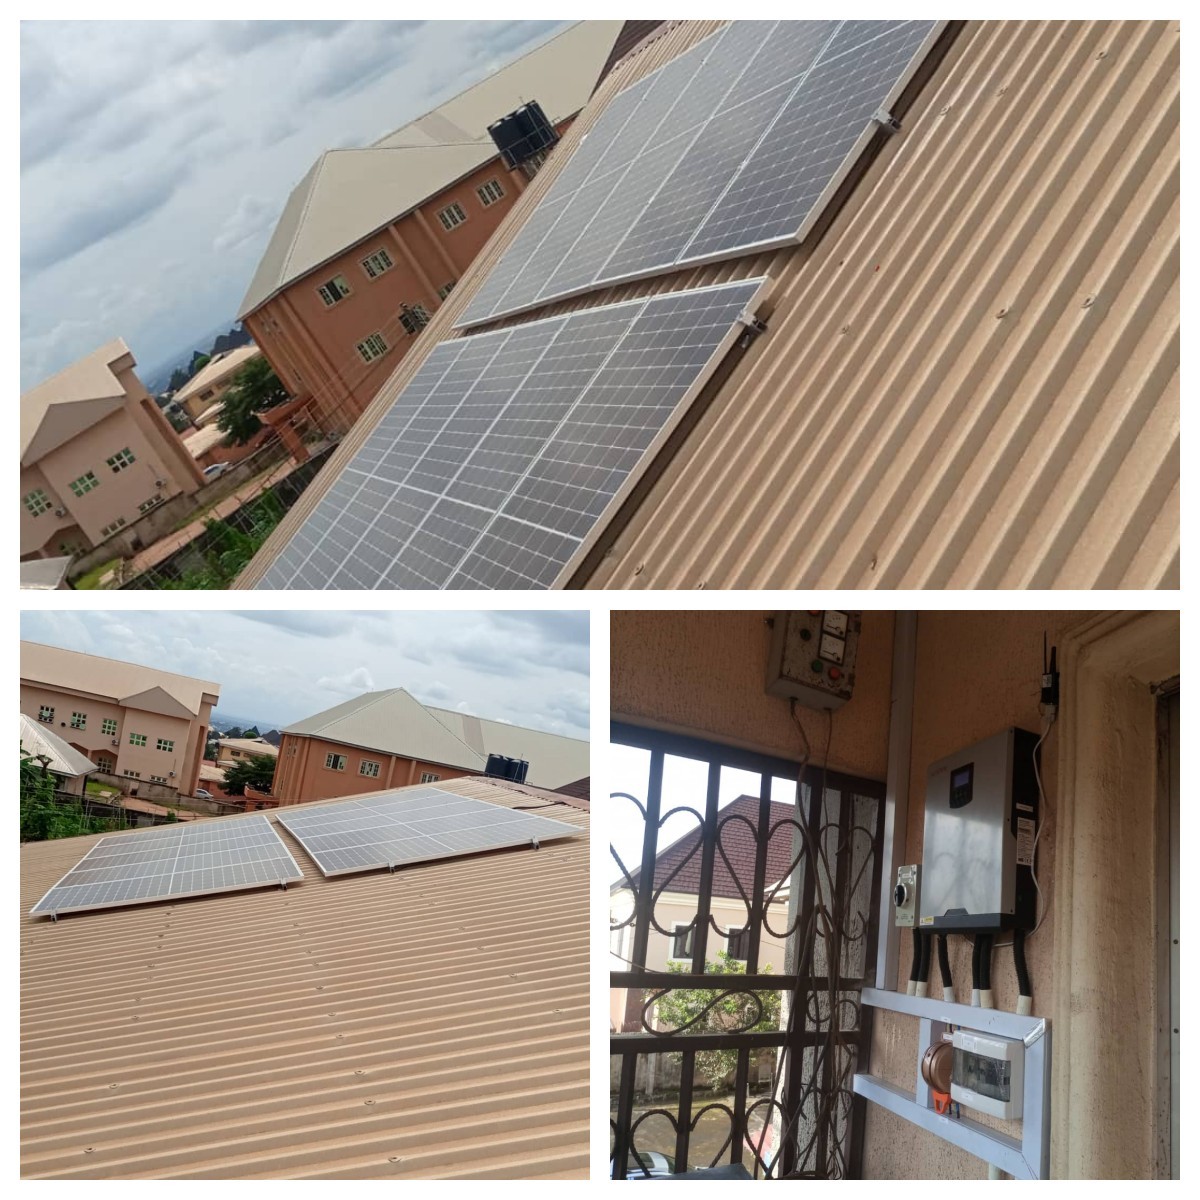 Solar panels&solar inverter used in South Africa